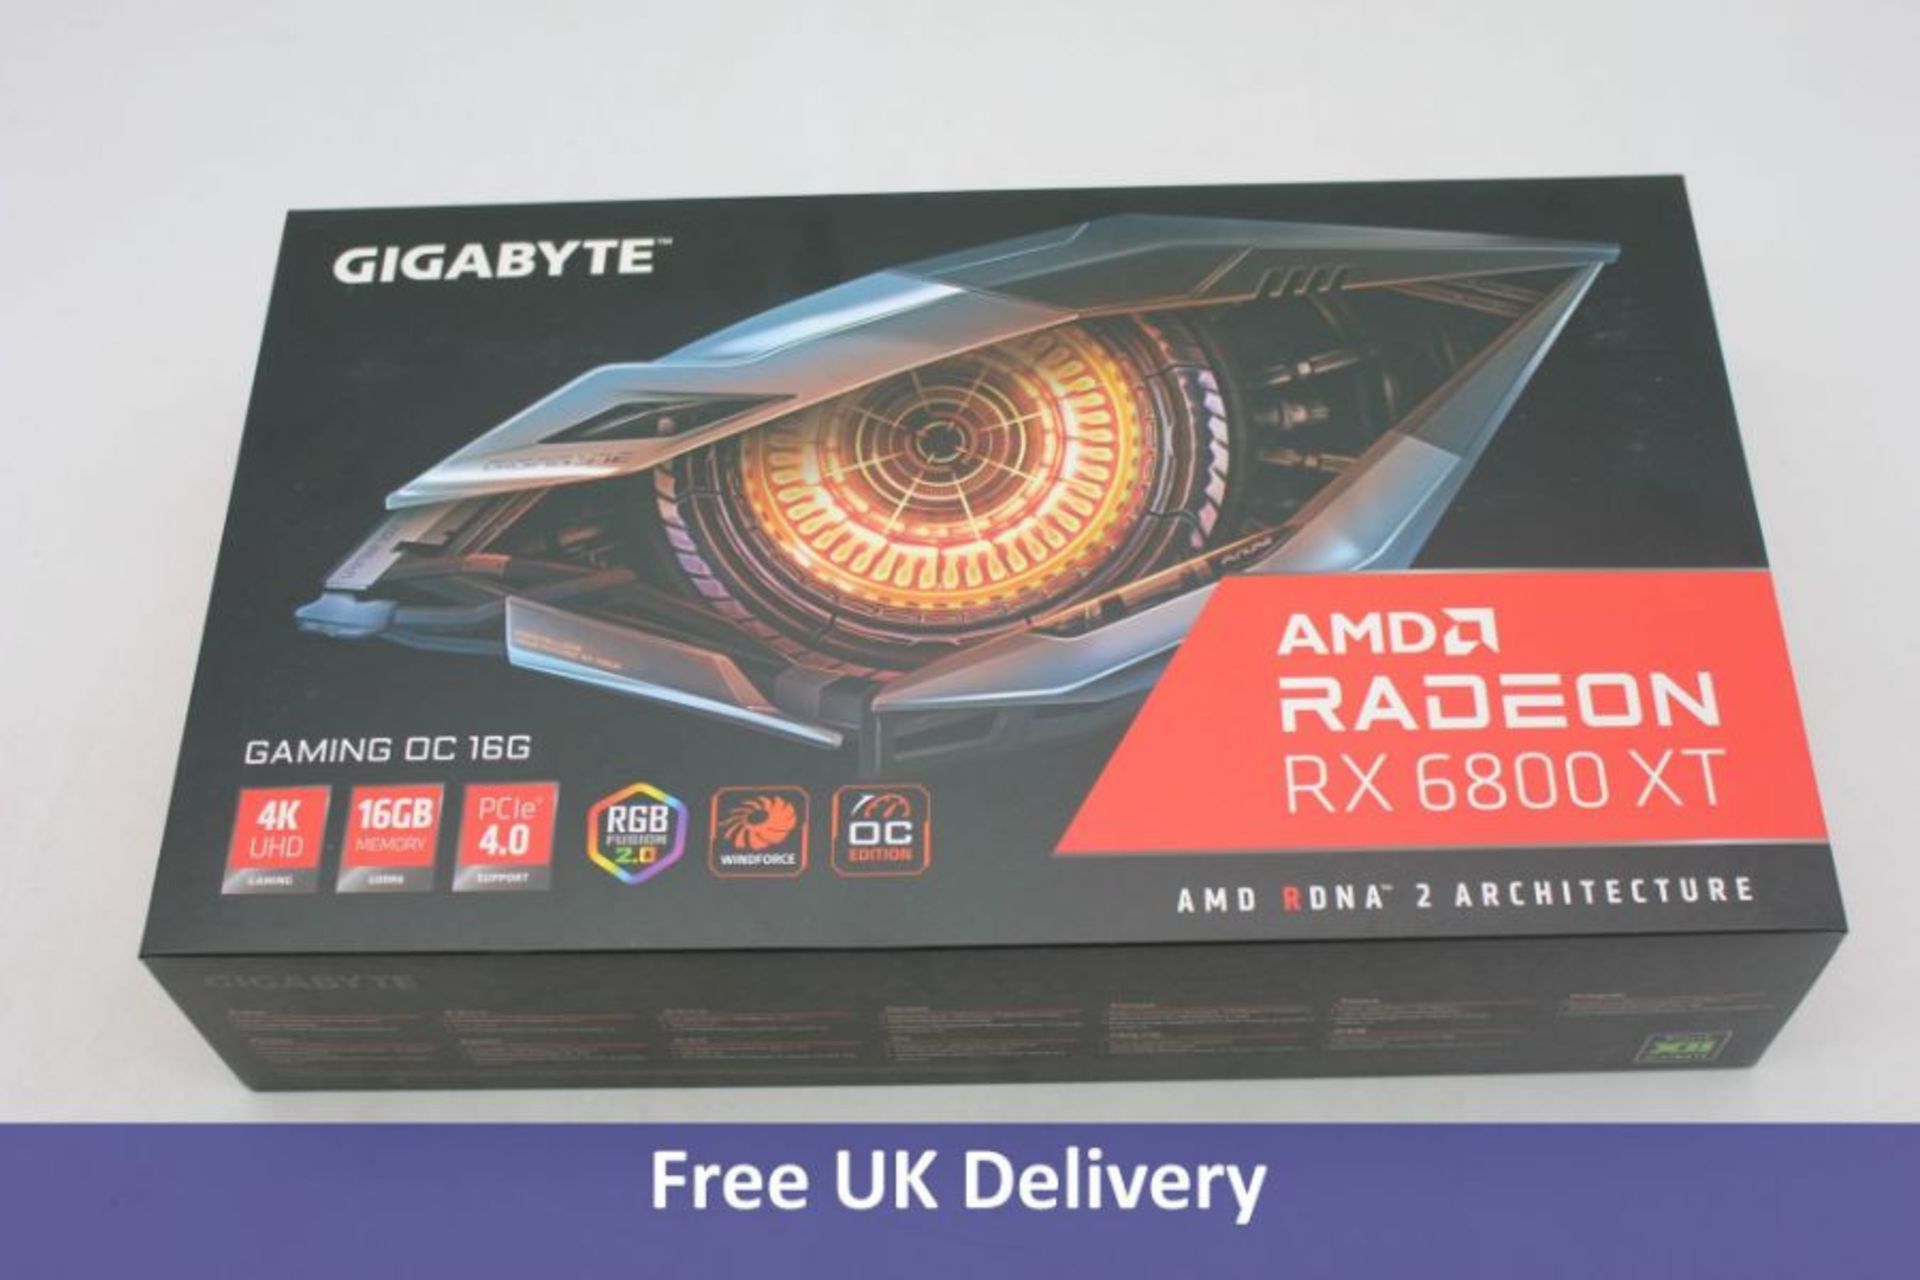 Gigabyte AMD Radeon RX 6800 XT Gaming Graphics Card